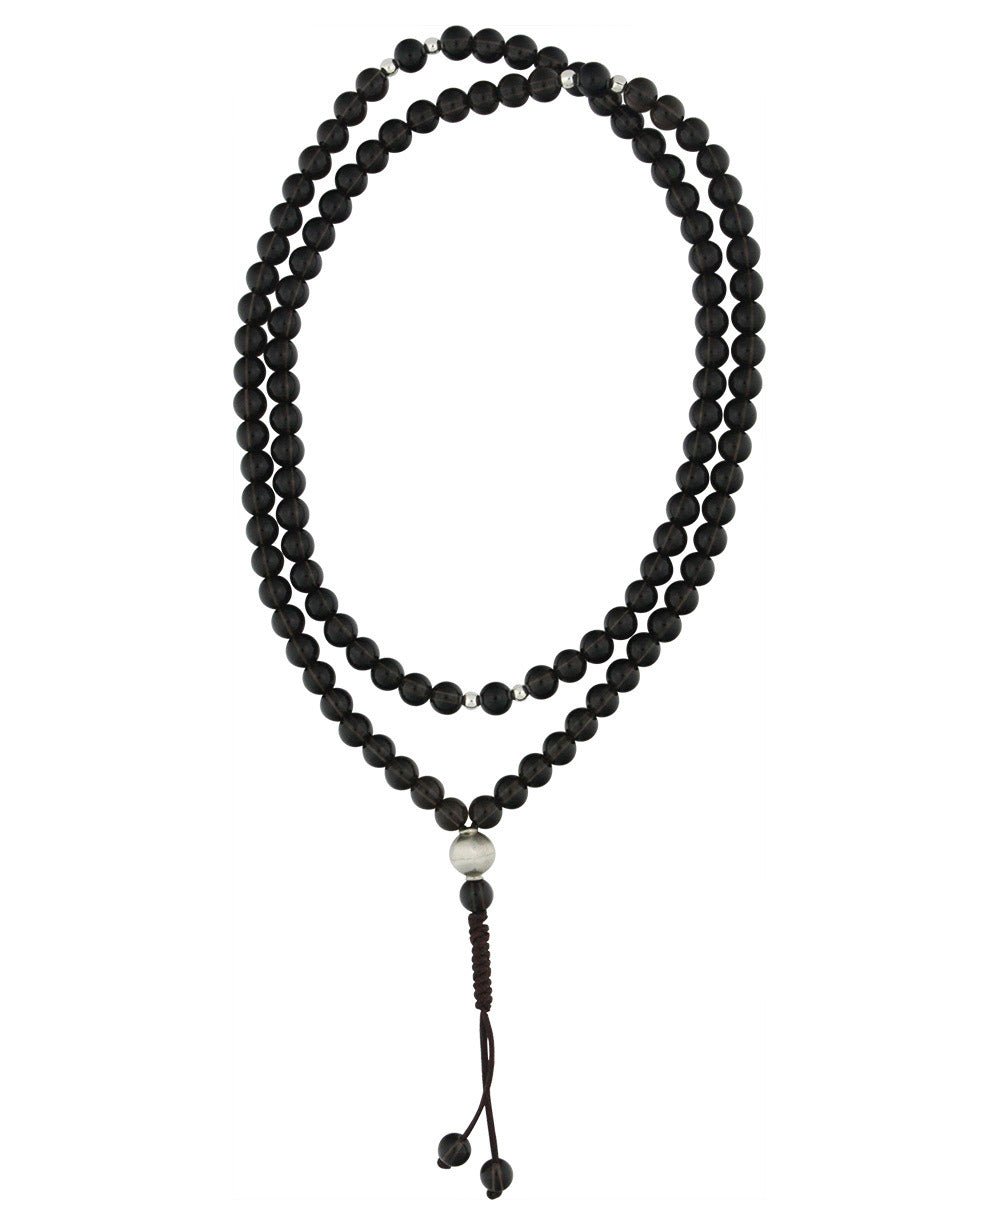 Smoky Quartz Meditation Mala, 108 Beads - Prayer Beads